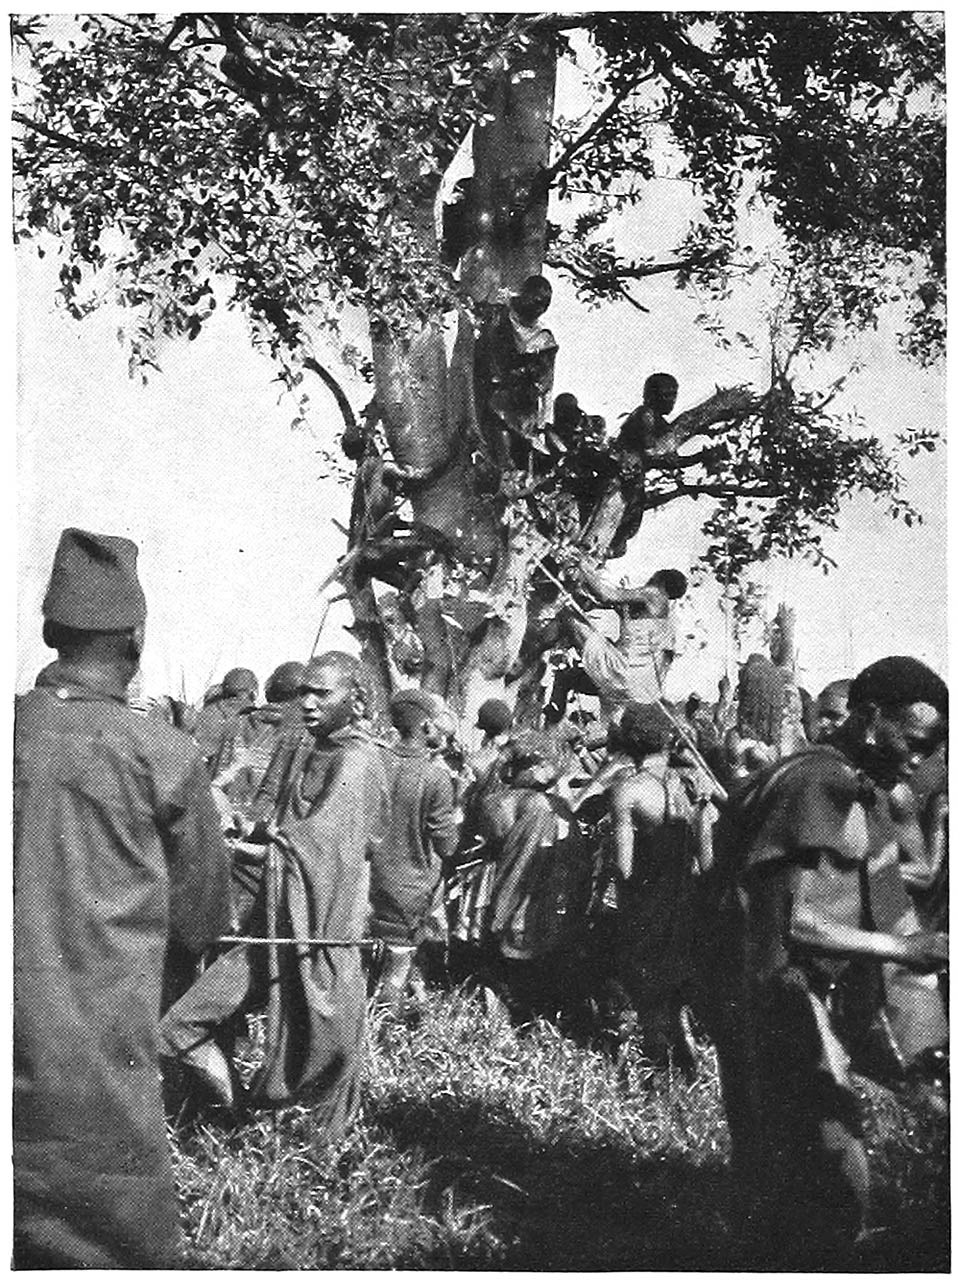 CLIMBING THE “MUGUMO” FIG TREE TO GATHER LEAVES.